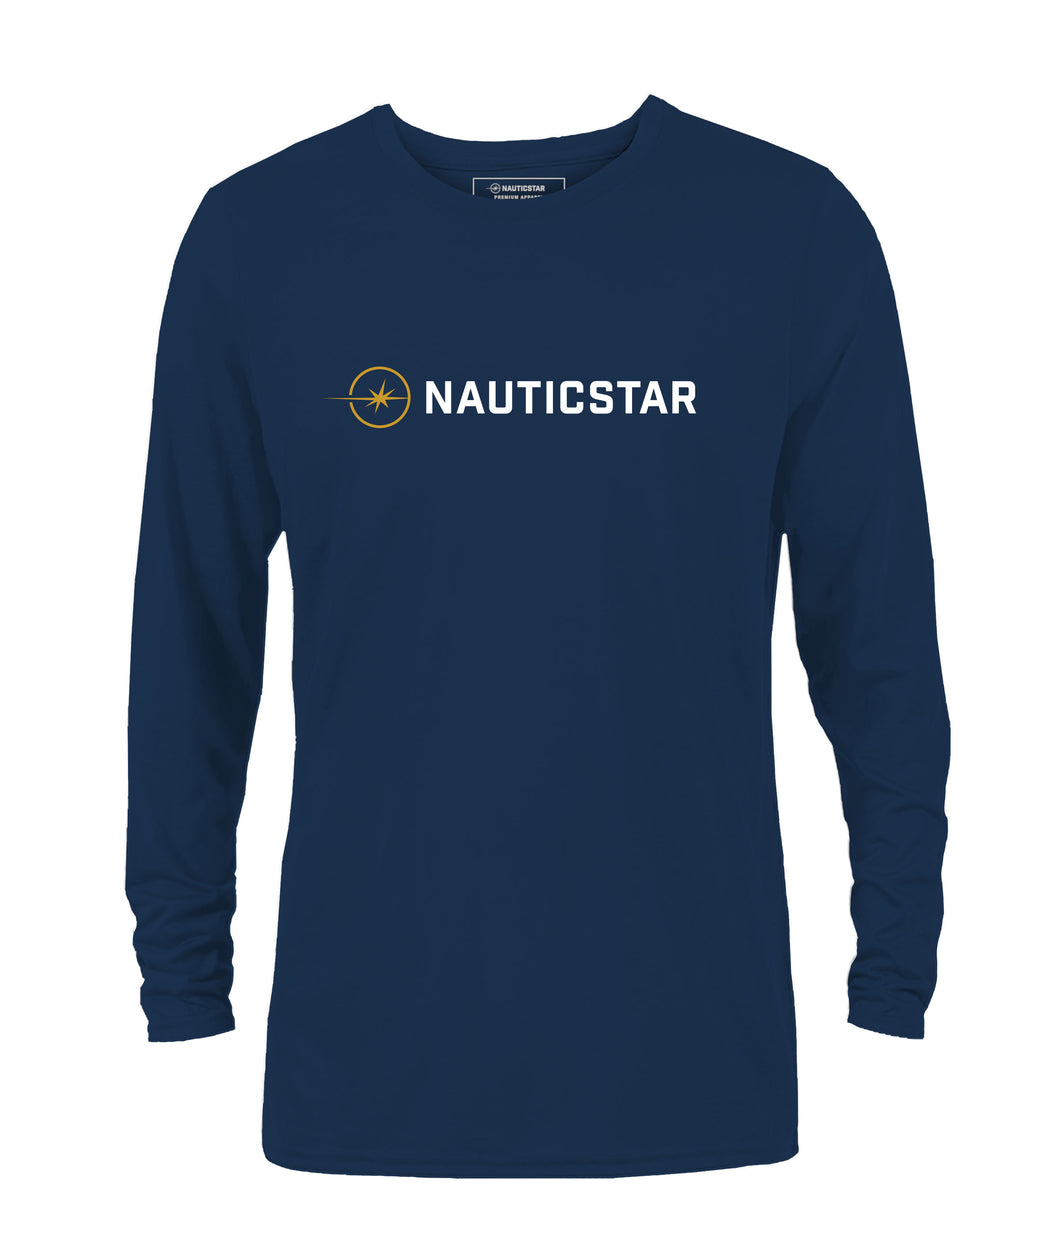 NauticStar Men's Long Sleeve T-Shirt - Navy